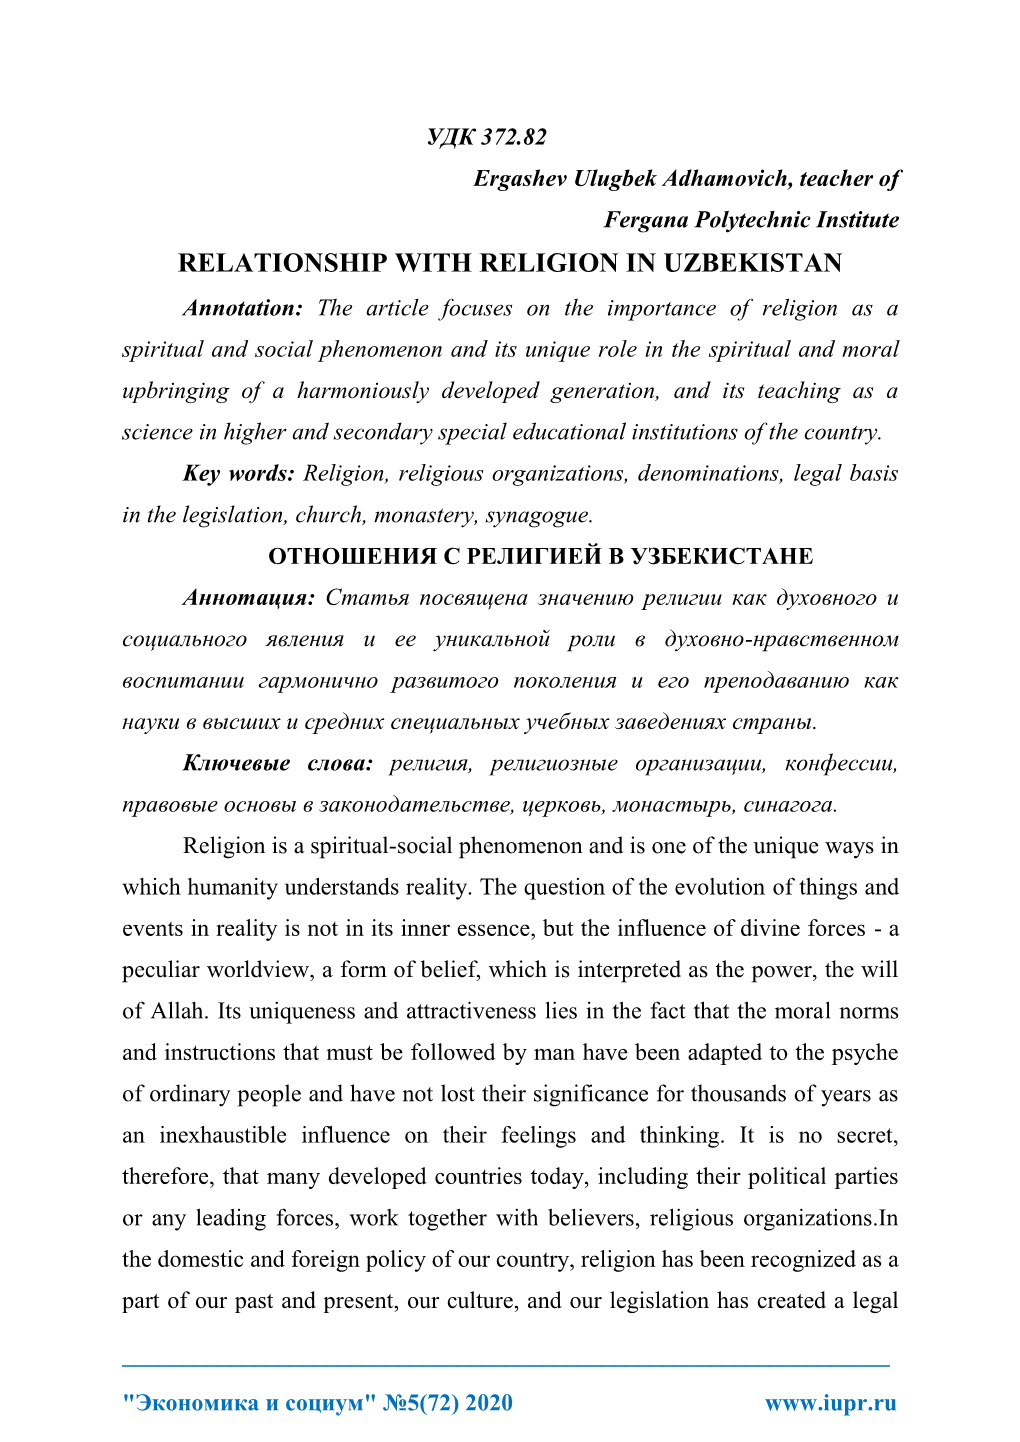 Relationship with Religion in Uzbekistan